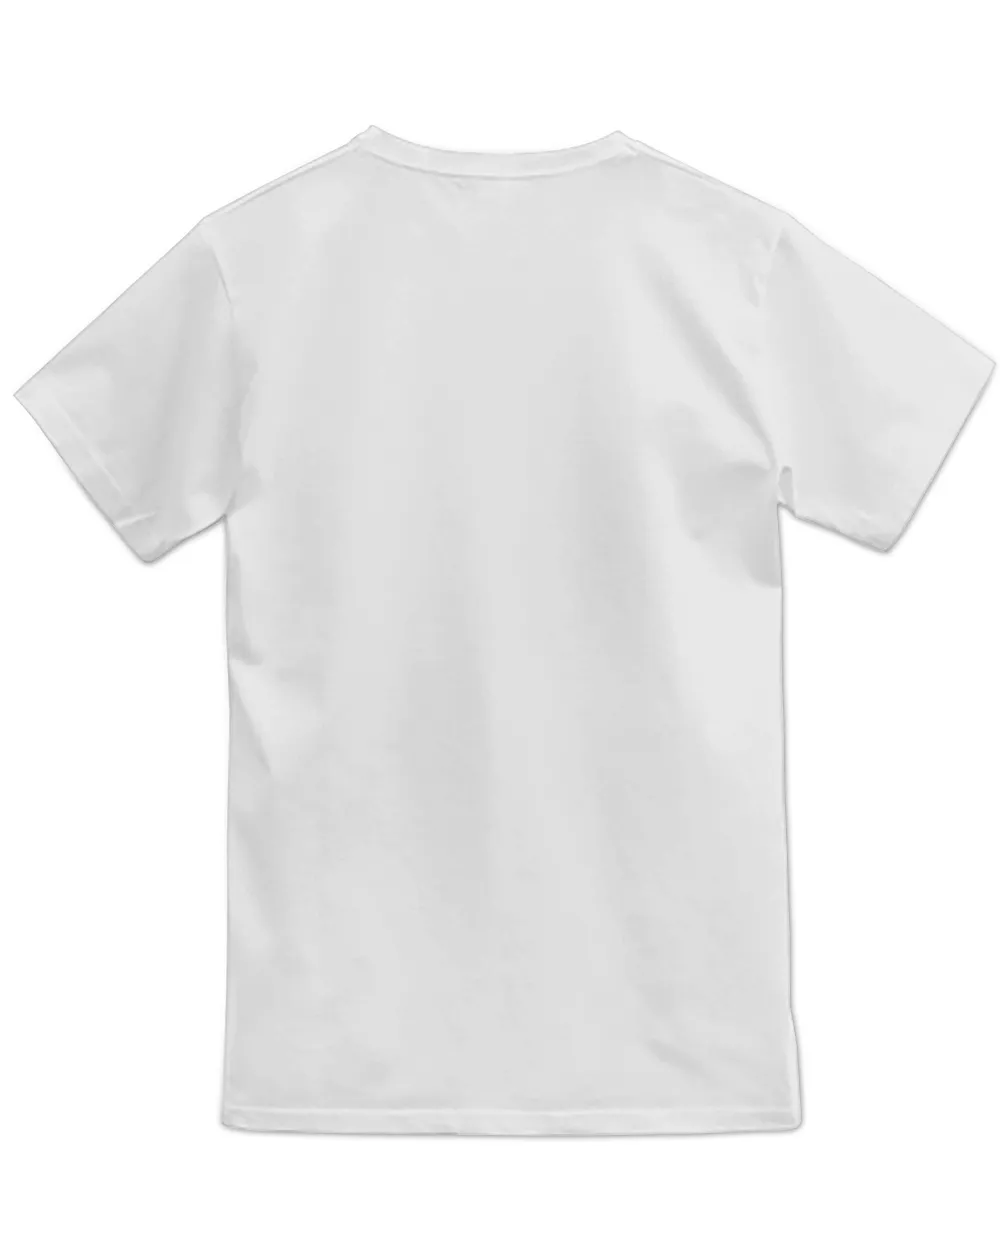 The Doobie Brothers Logo T-Shirt